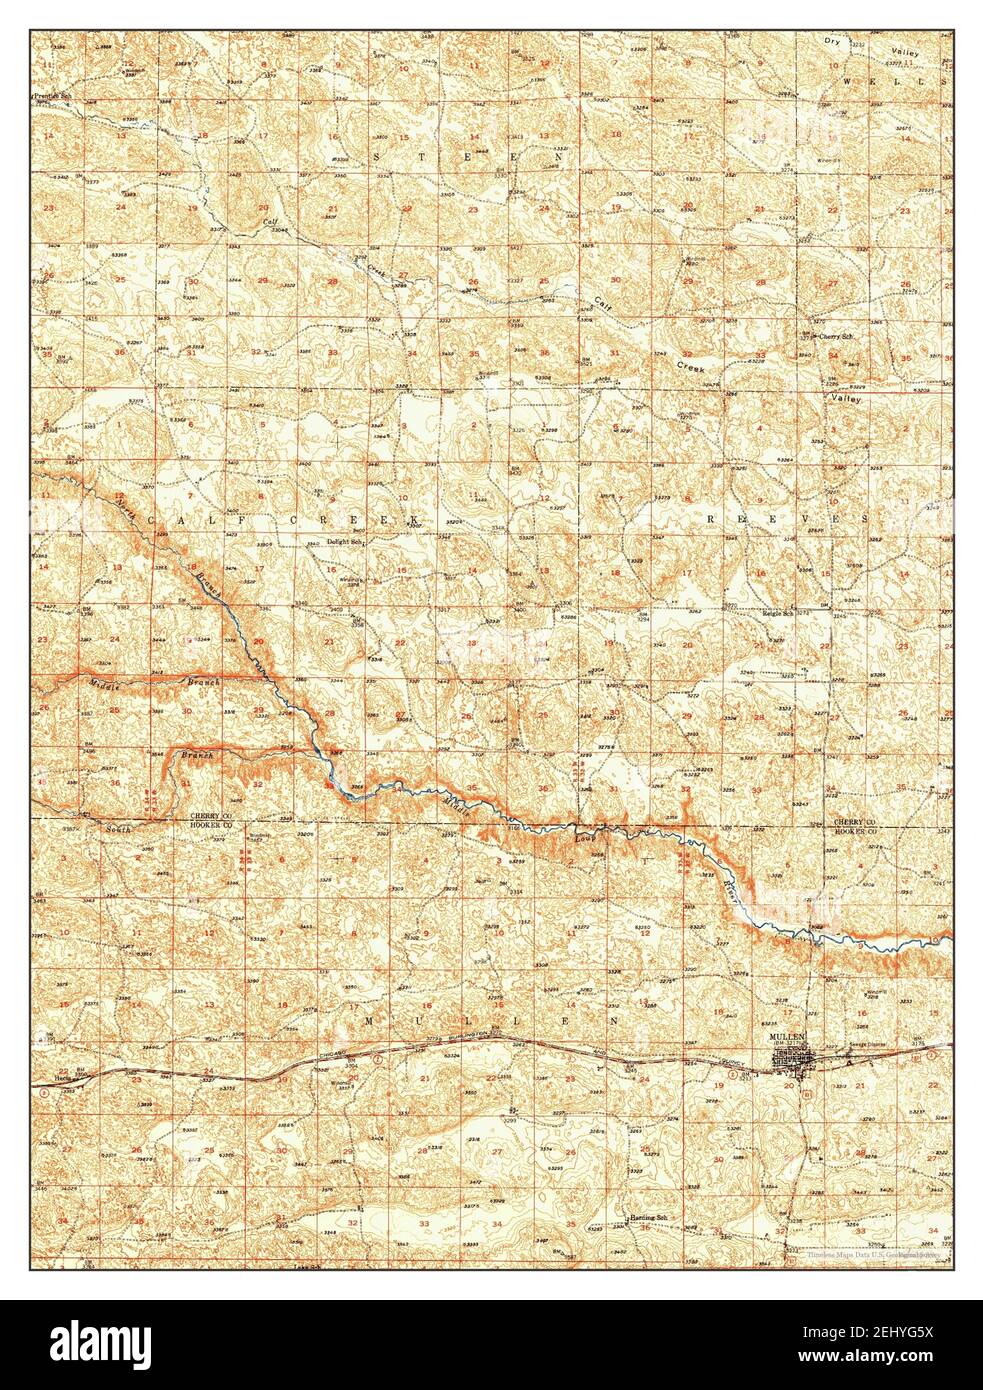 Mullen, Nebraska, map 1951, 1:62500, United States of America by Timeless Maps, data U.S. Geological Survey Stock Photo